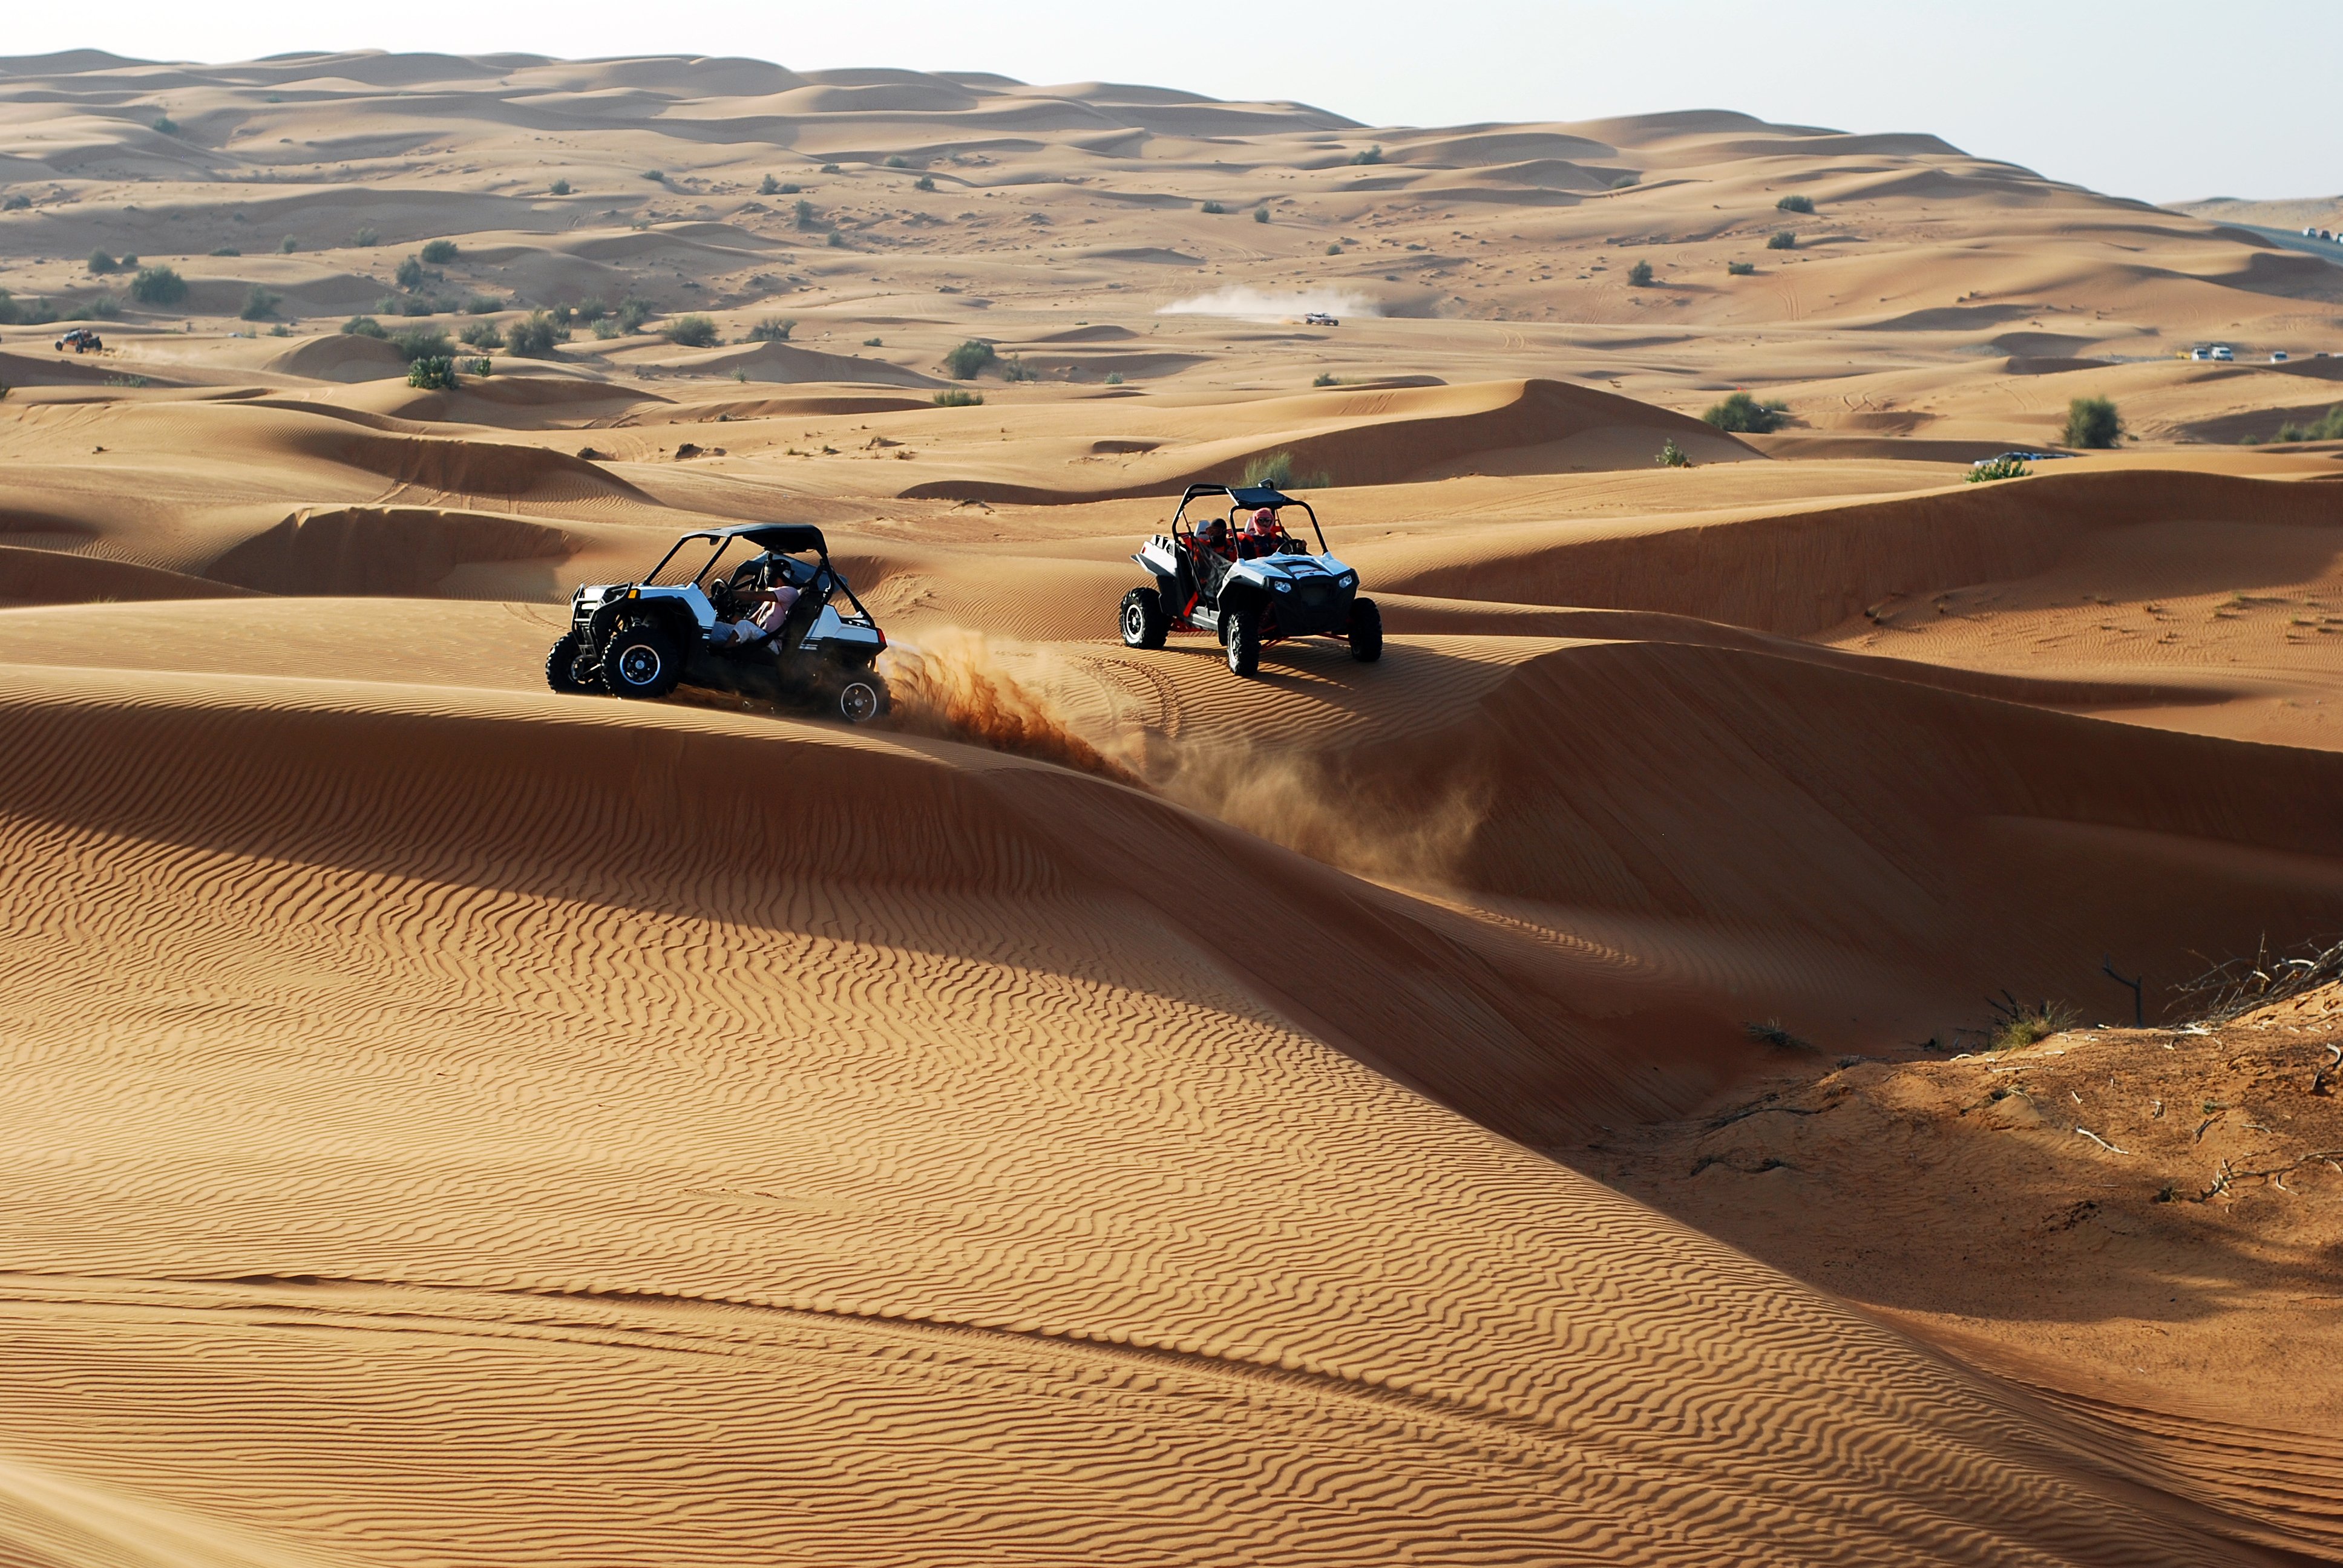 https://cdn.dealeusedevoyages.com/sites/default/files/article/Offroad buggy desert safari race trip in Dubai, UAE.jpg